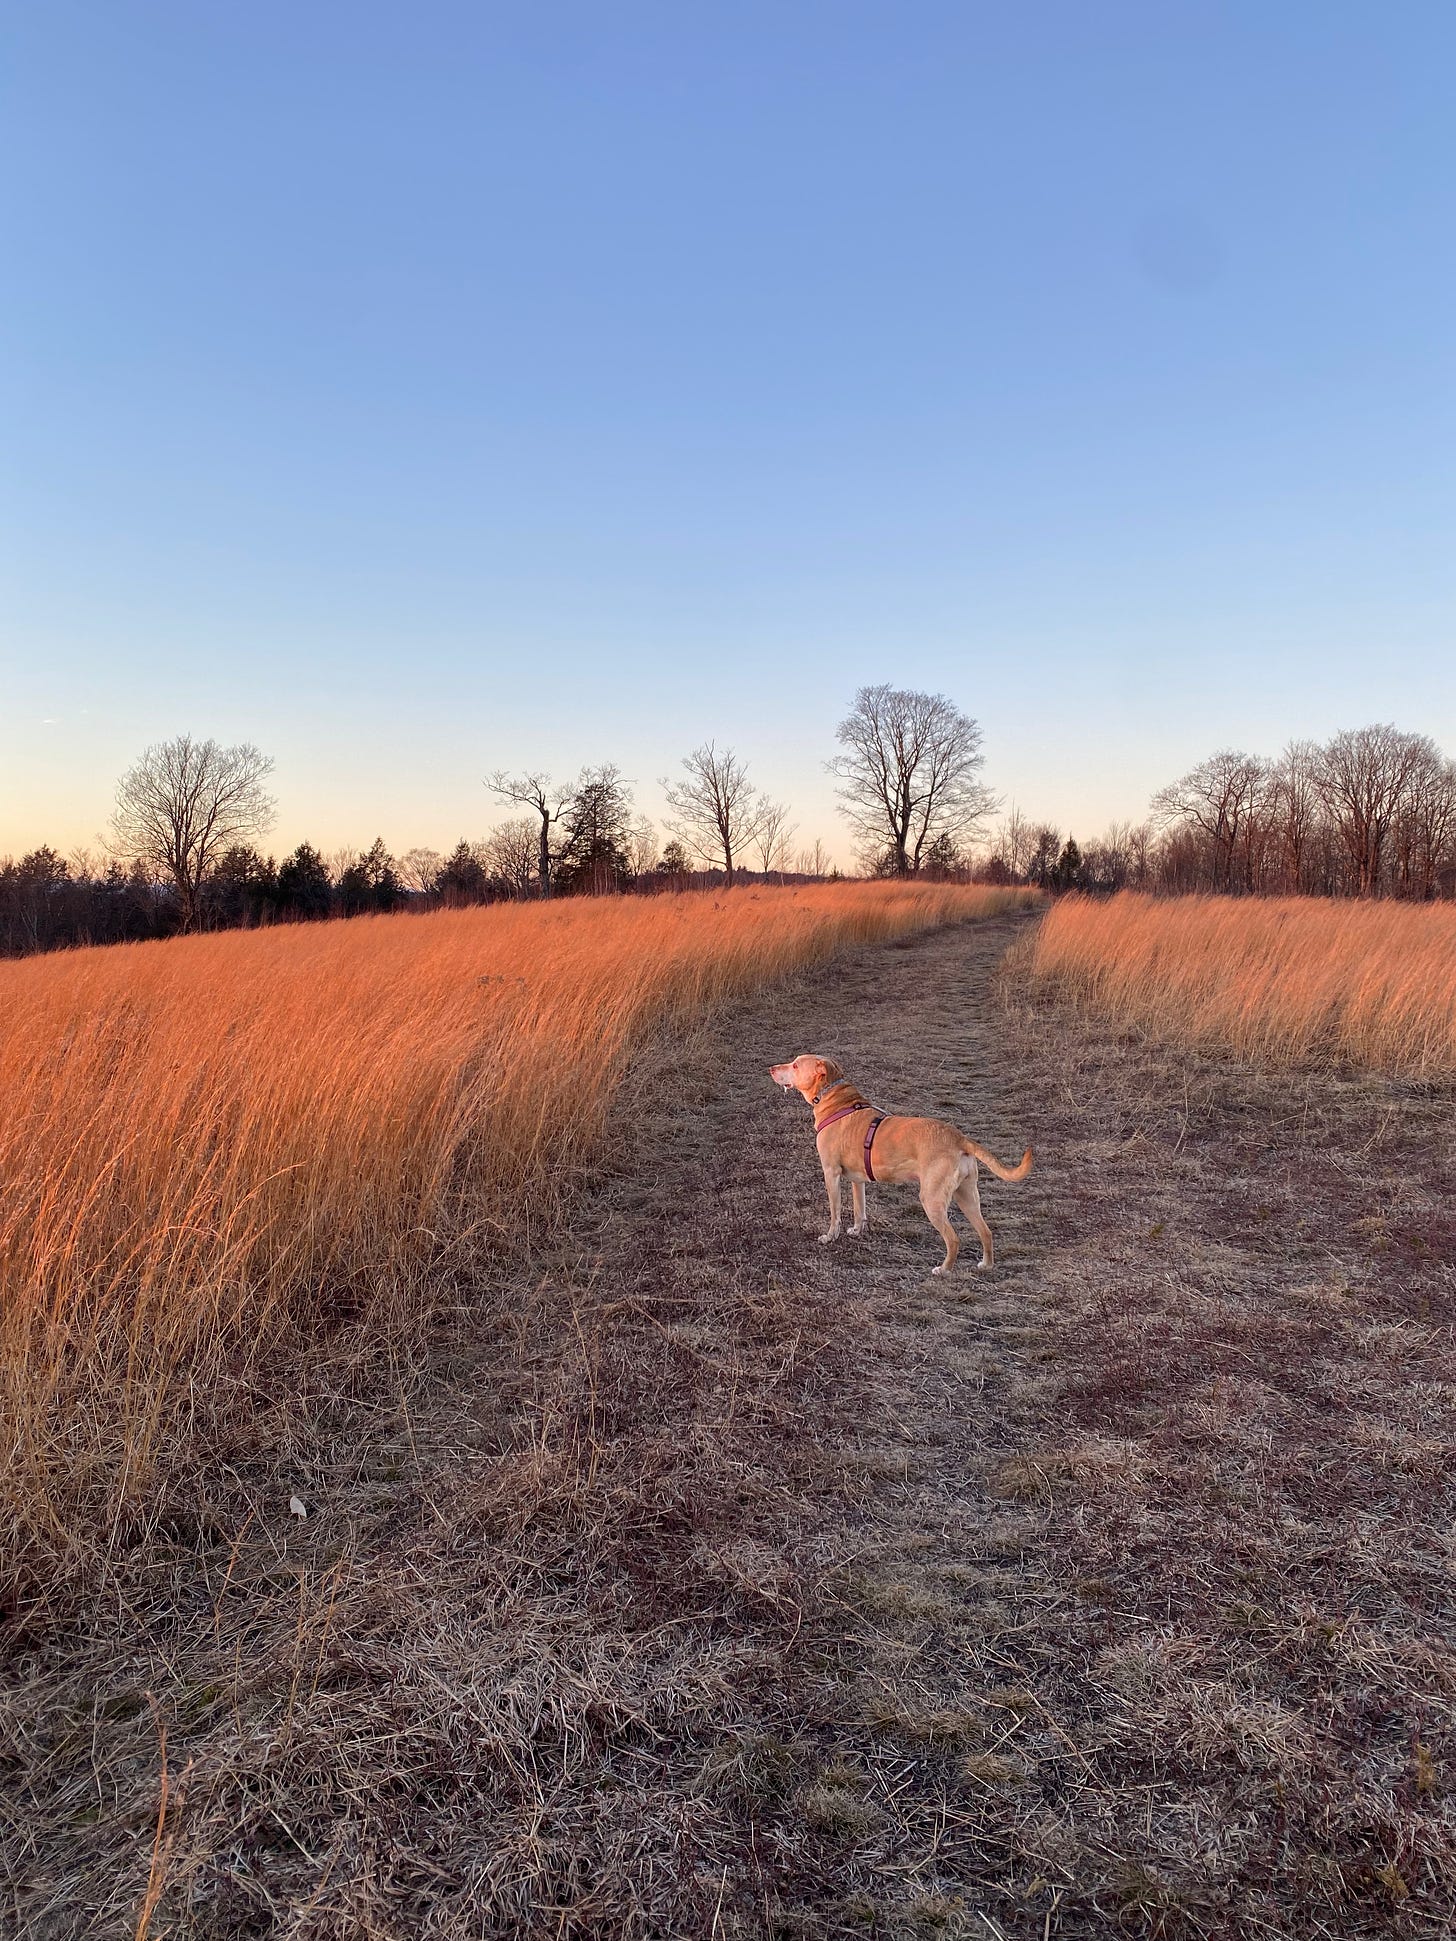 Nessa on the ridge at sunset, standing in a field of golden grass under a sharp blue sky.